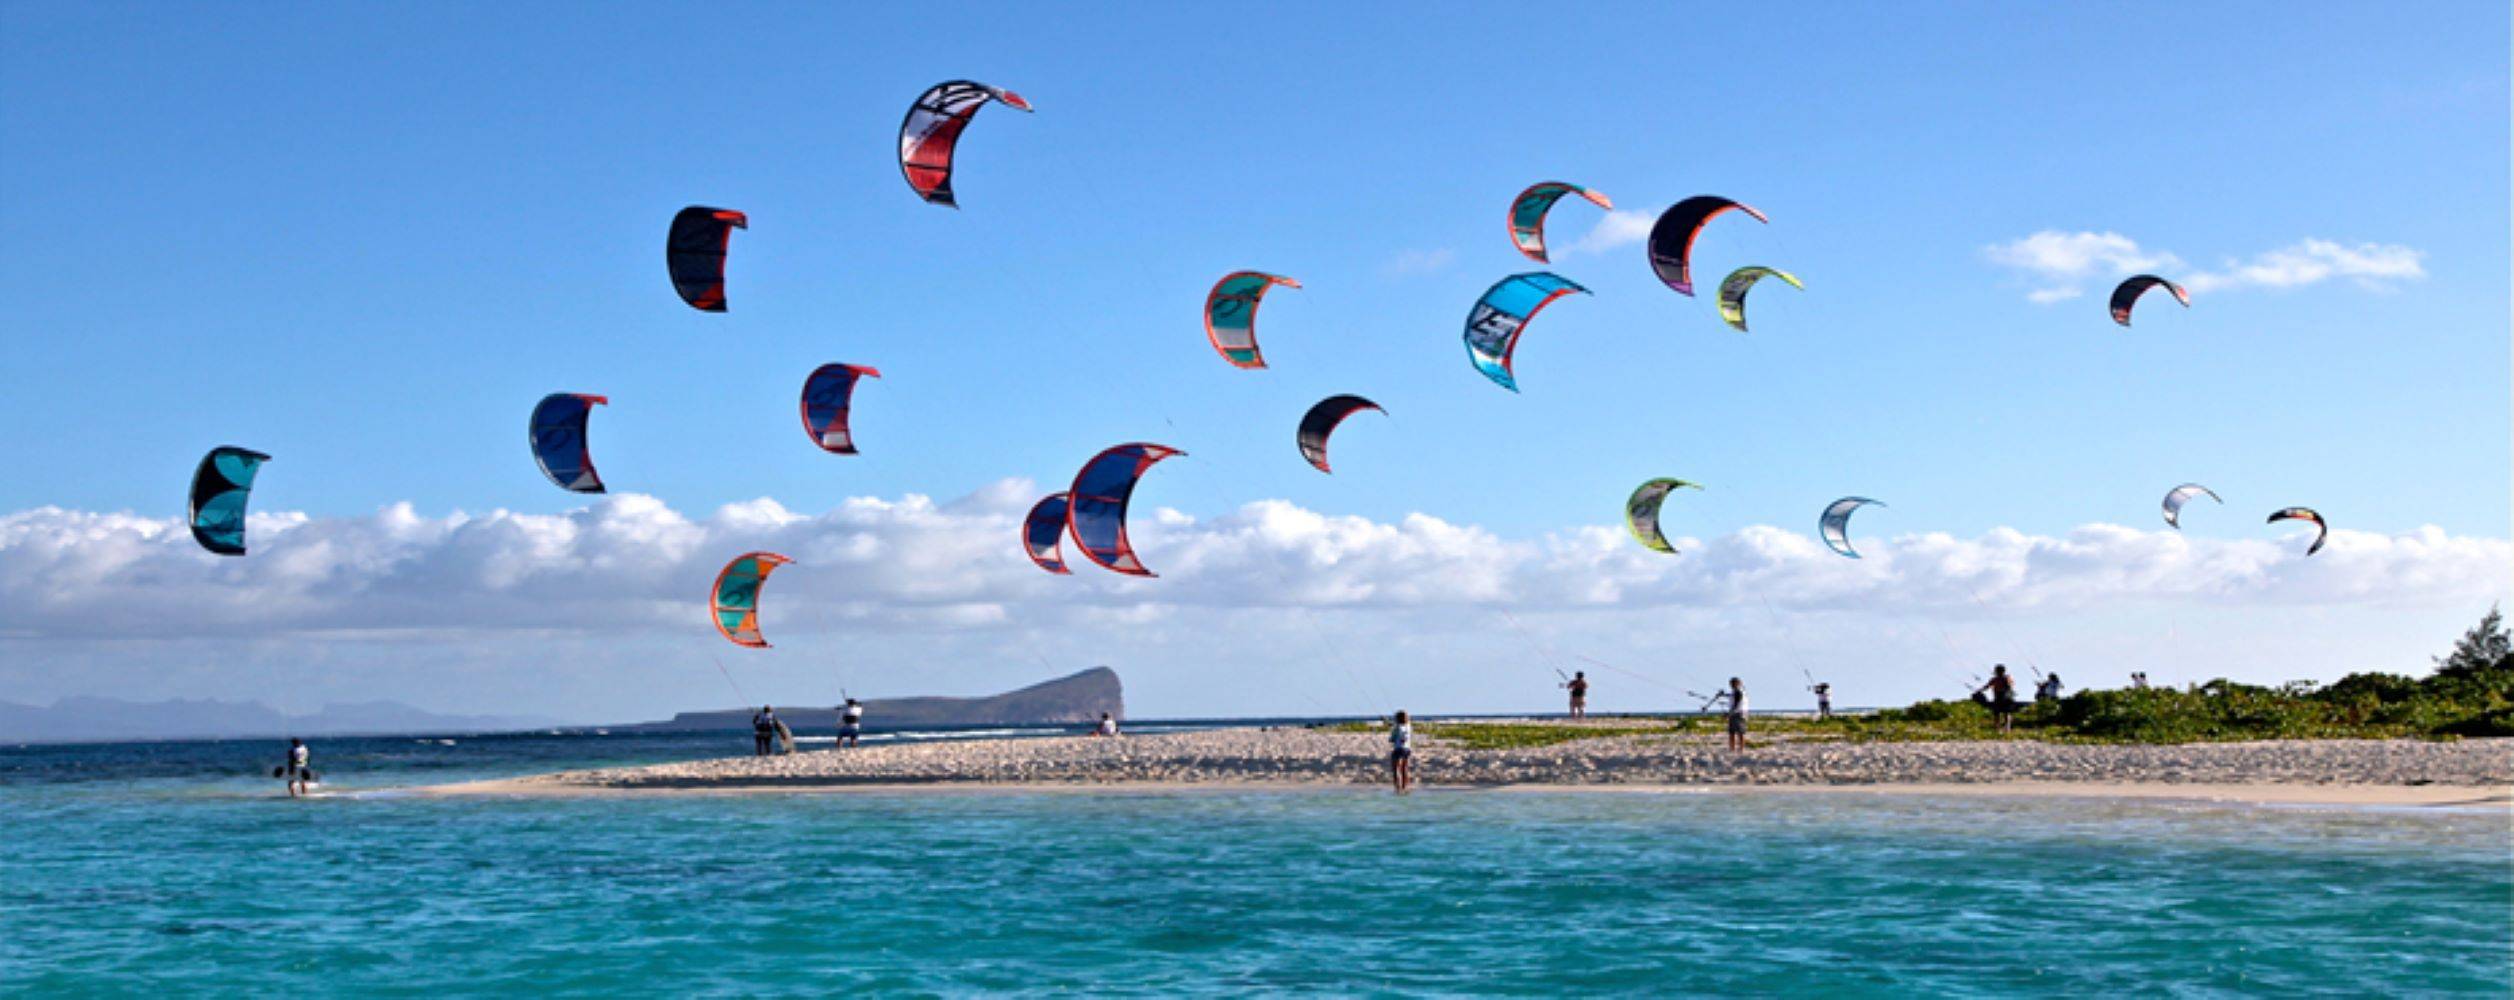 Initiation au kite surf